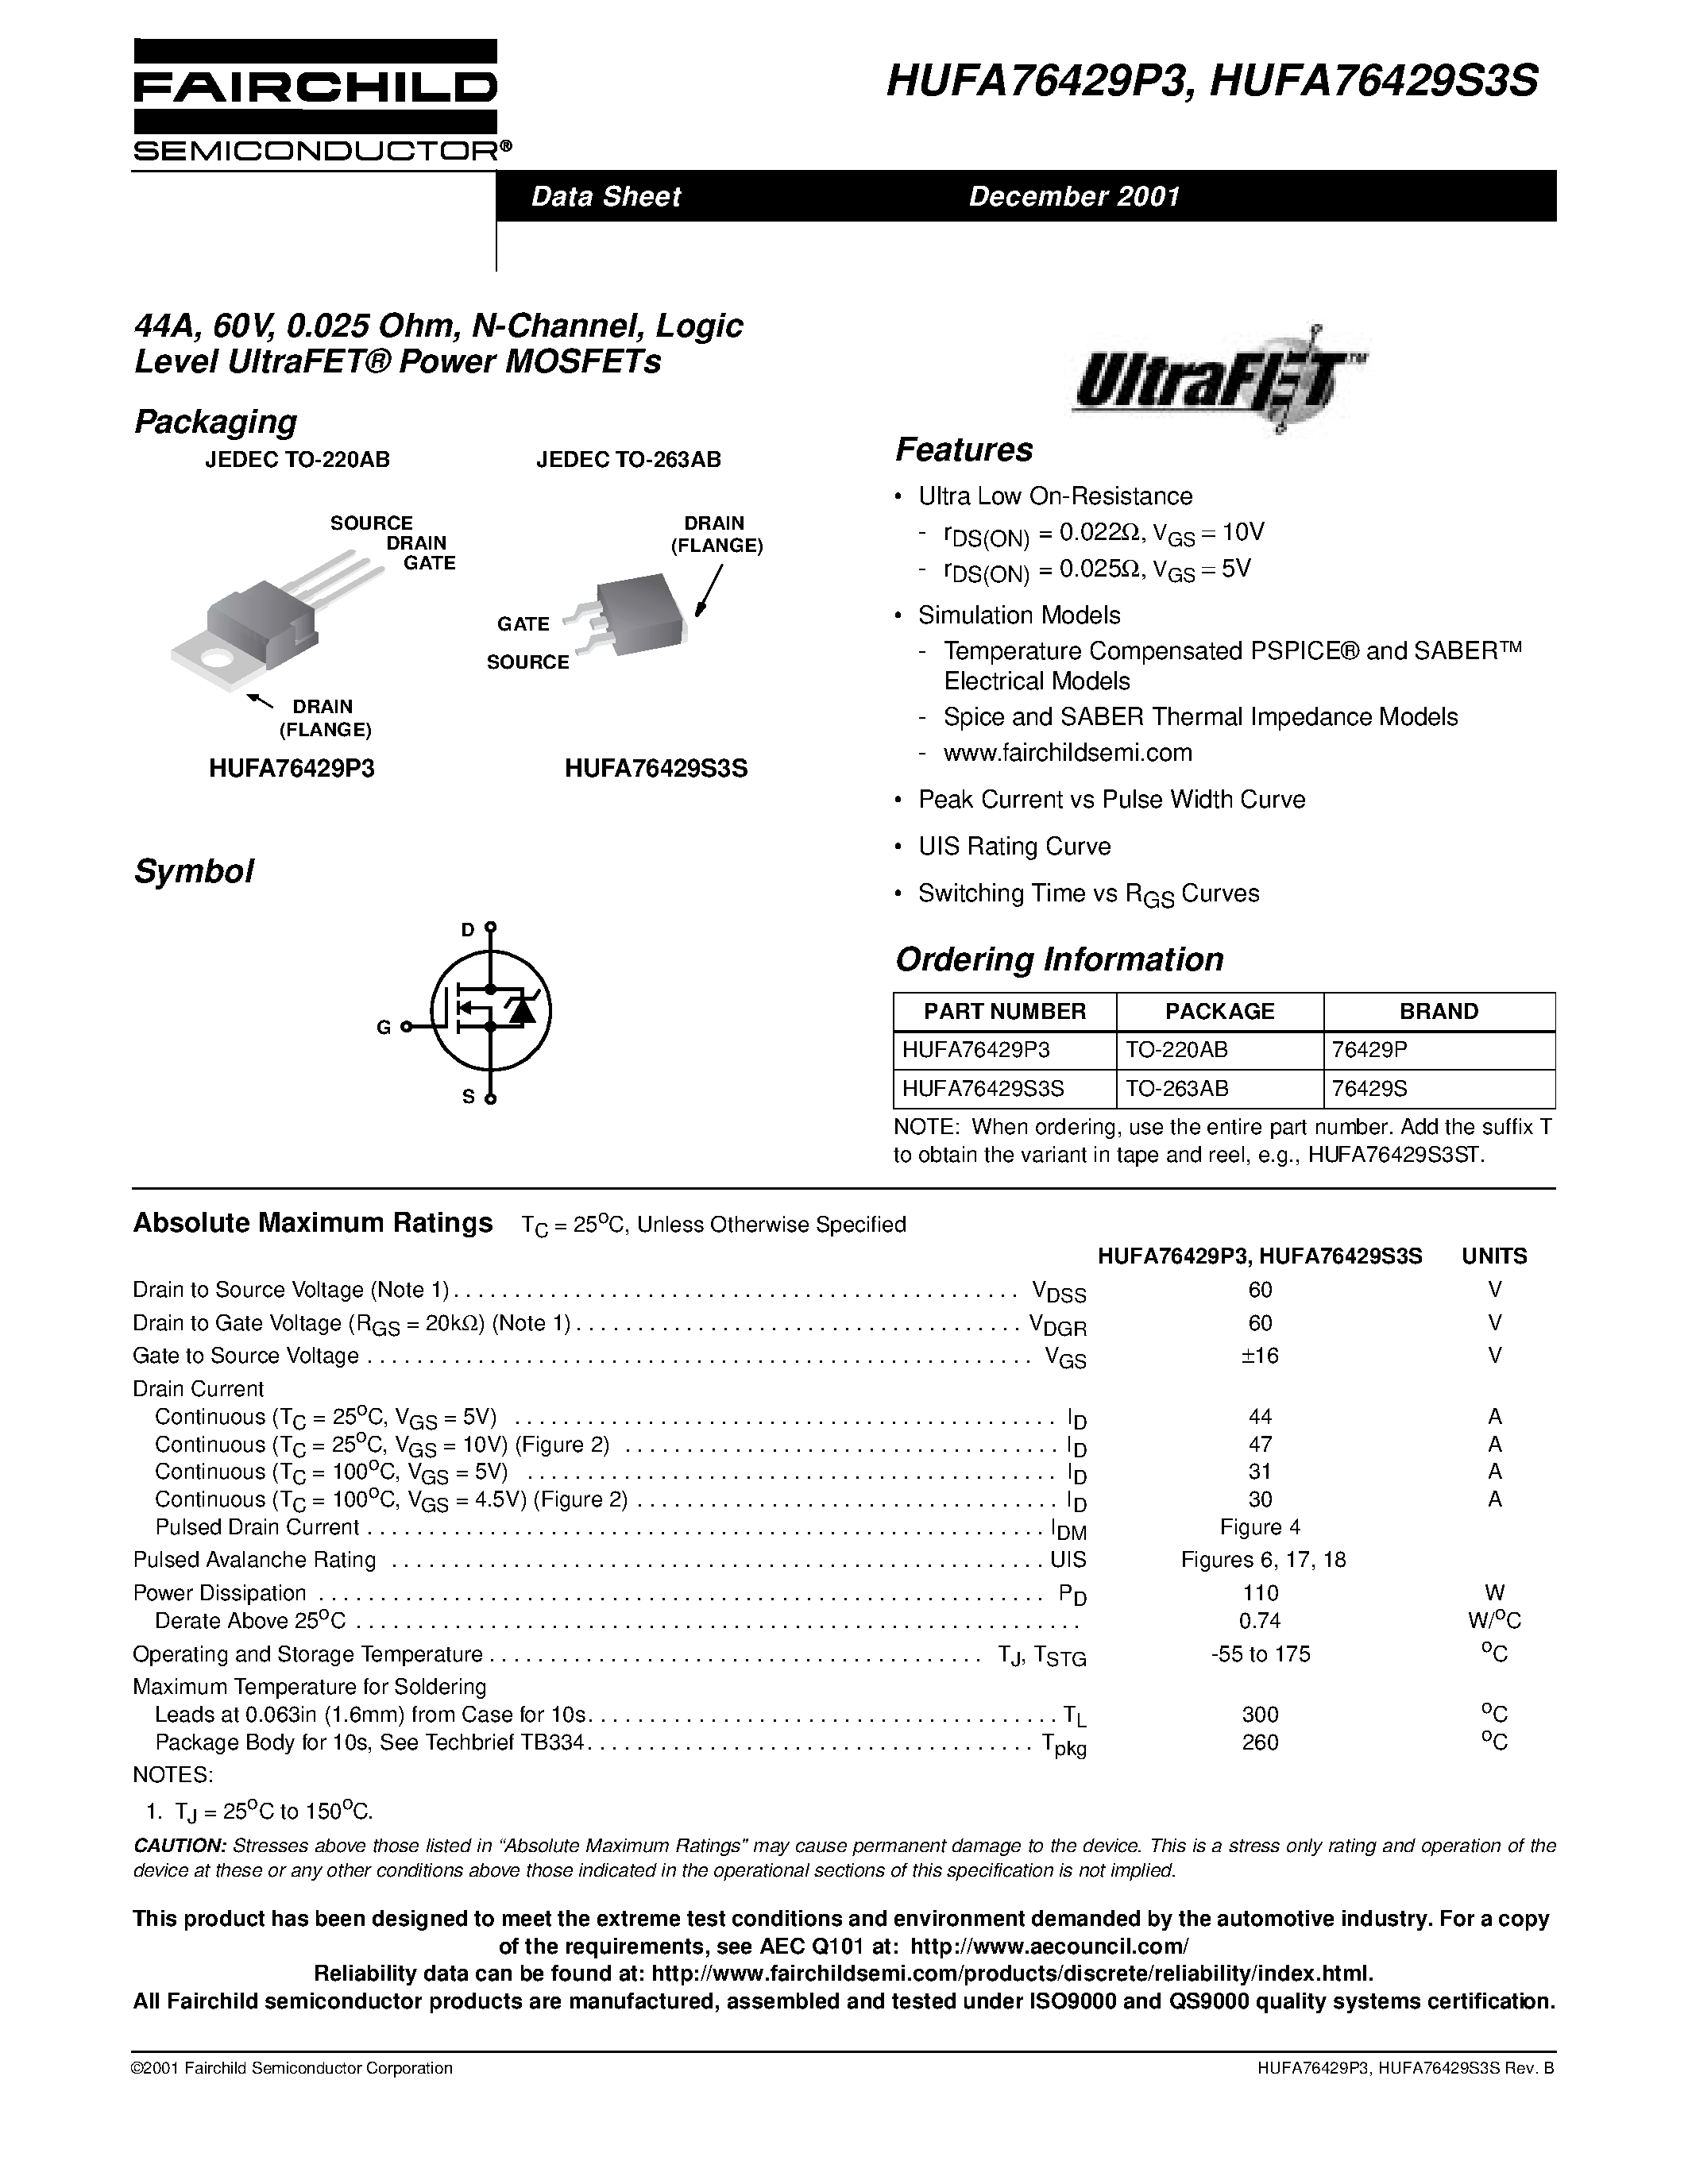 Даташит HUFA76429S3S - 44A/ 60V/ 0.025 Ohm/ N-Channel/ Logic Level UltraFET Power MOSFETs страница 1